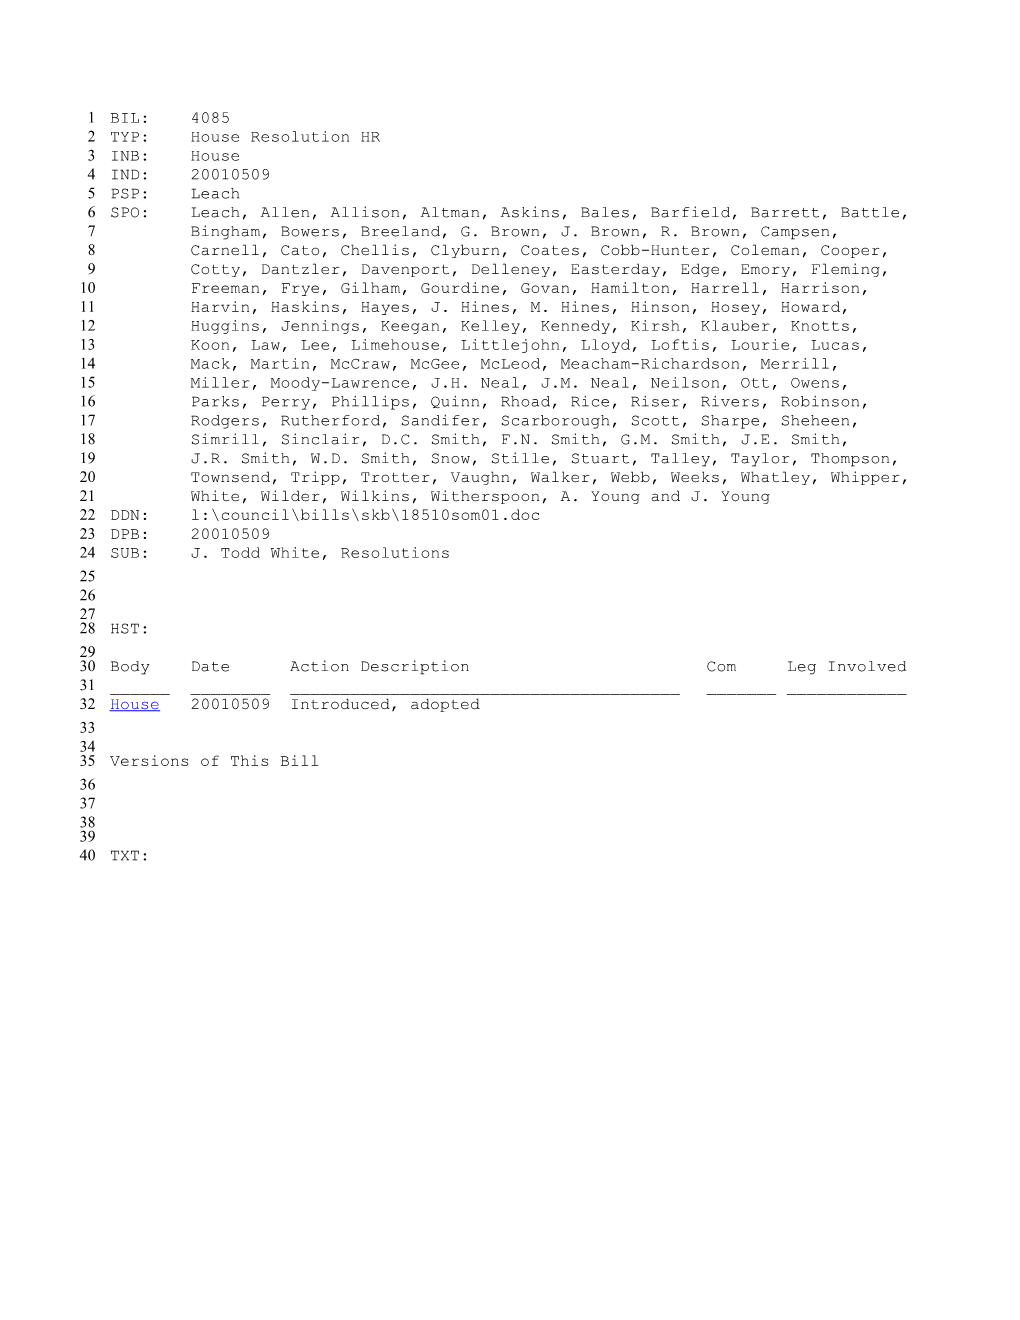 2001-2002 Bill 4085: J. Todd White, Resolutions - South Carolina Legislature Online